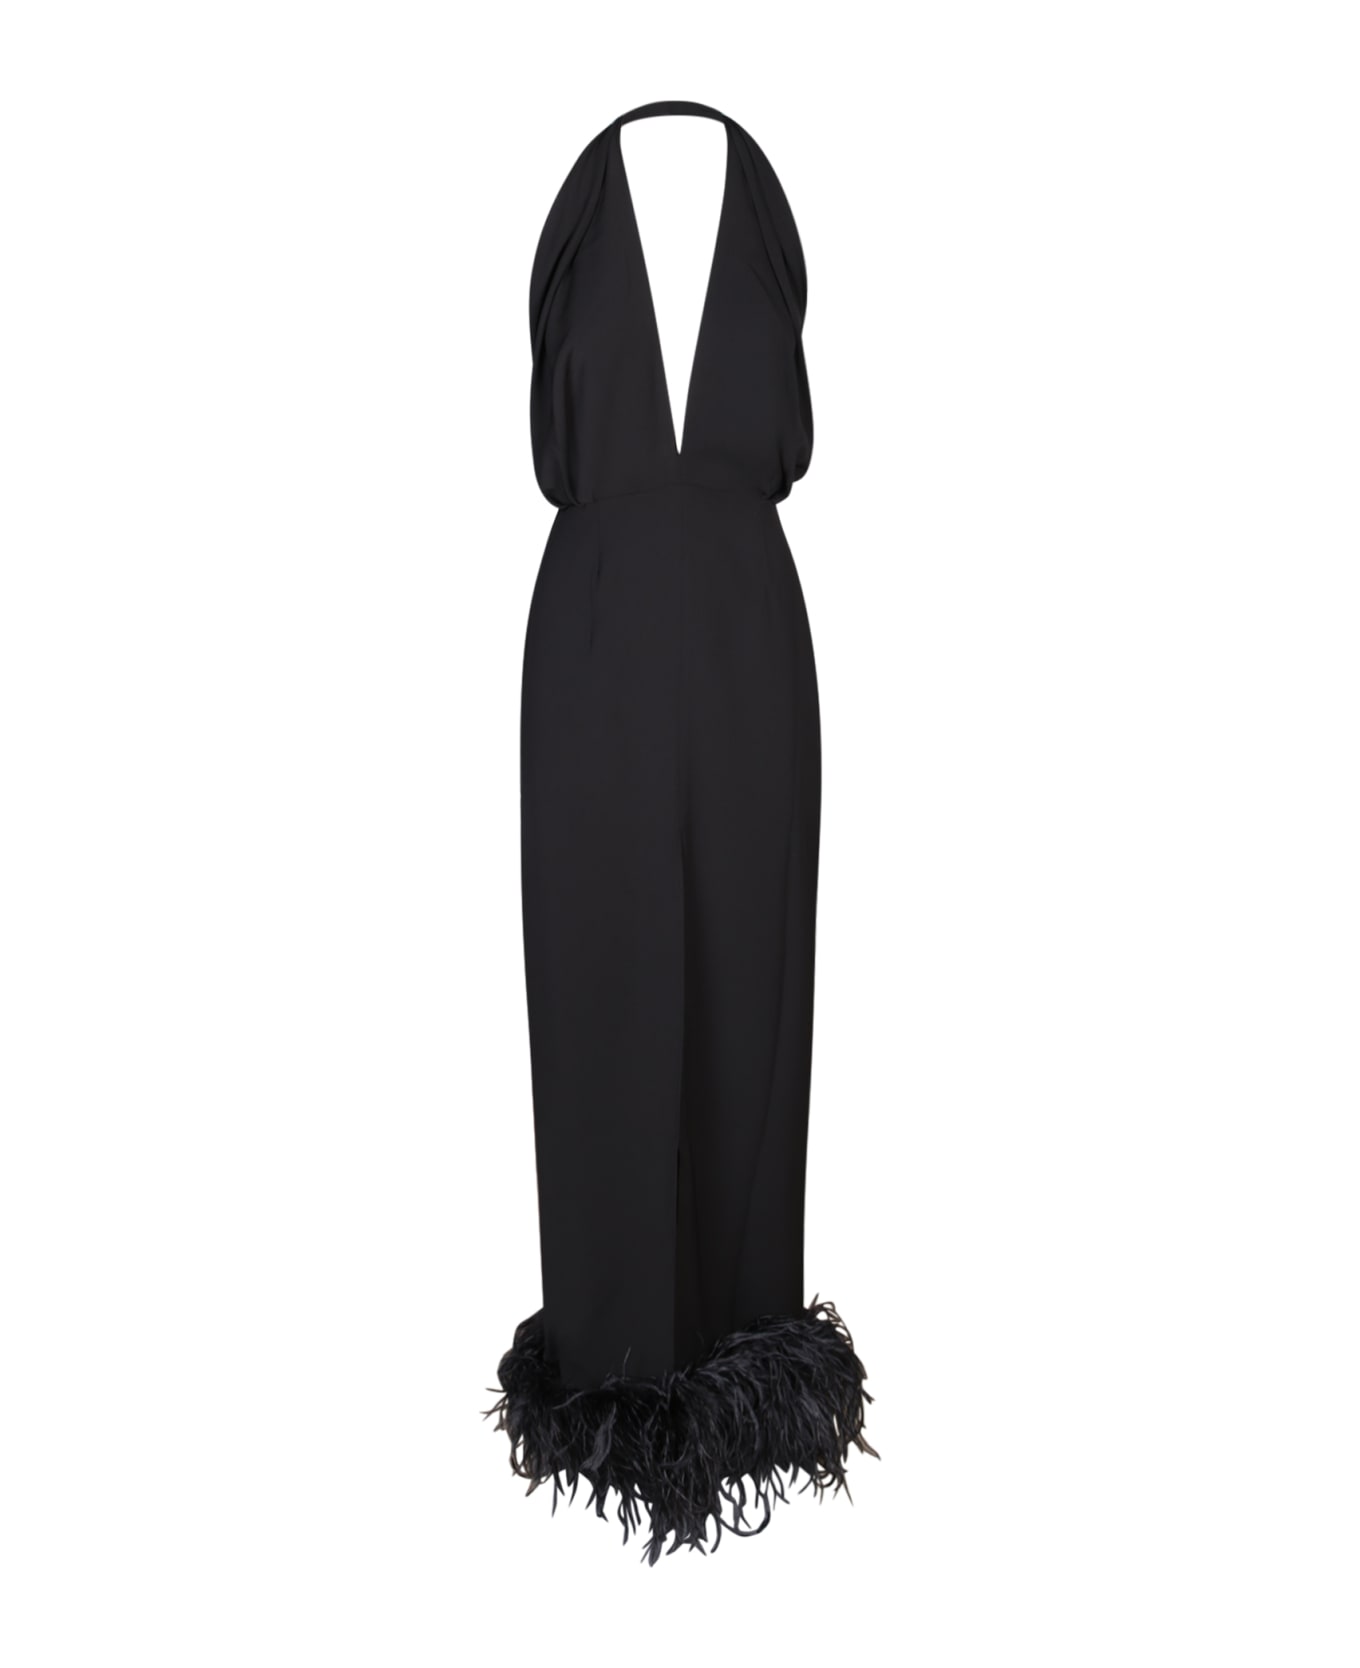 16arlington Isolde Black Dress - Black ジャンプスーツ